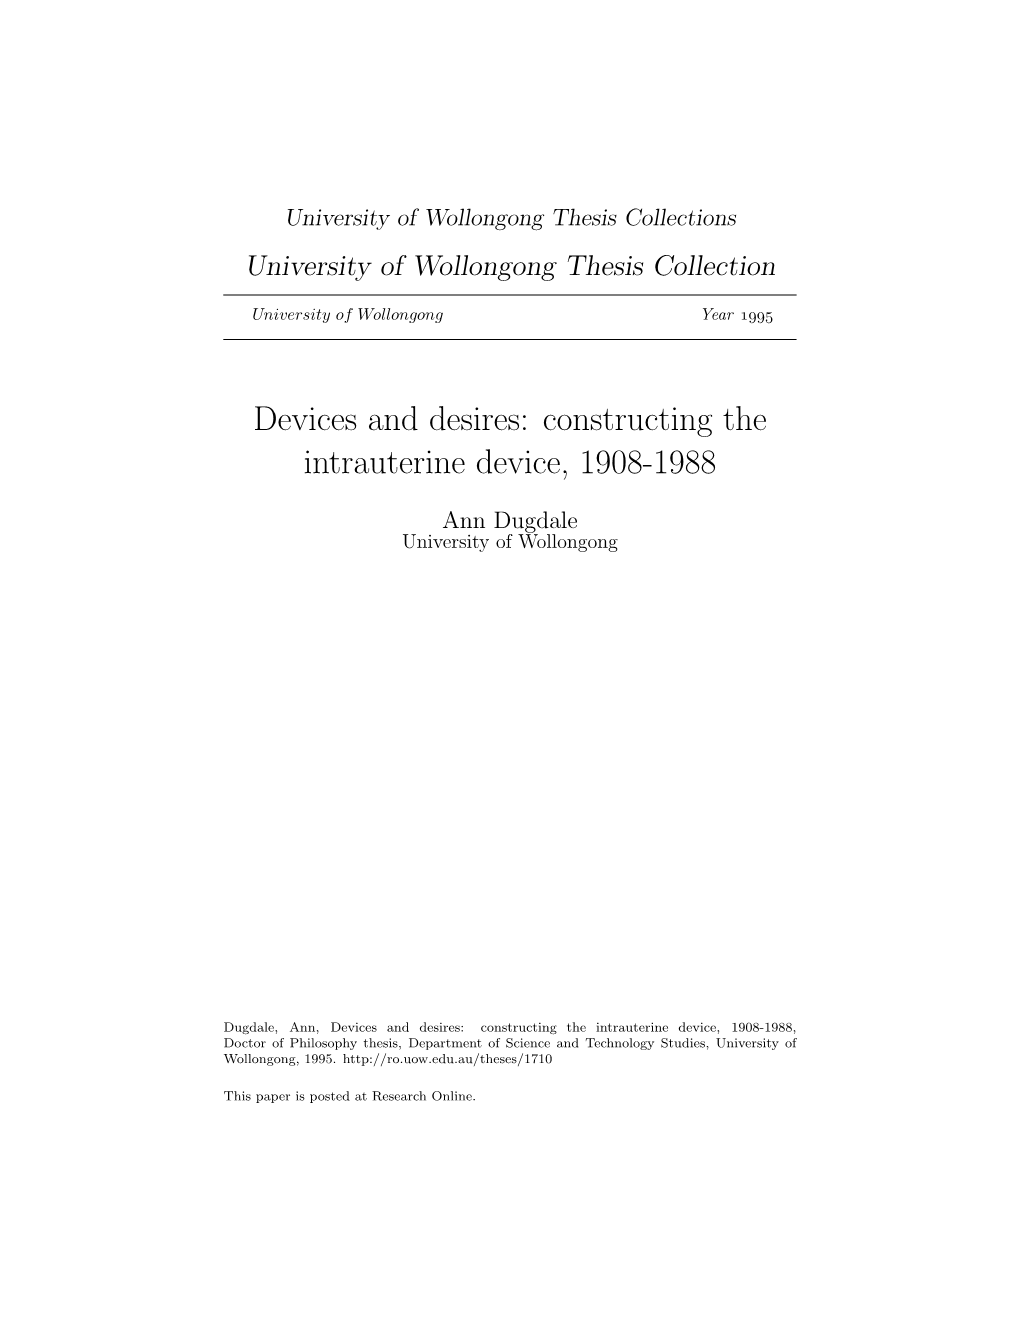 Constructing the Intrauterine Device, 1908-1988